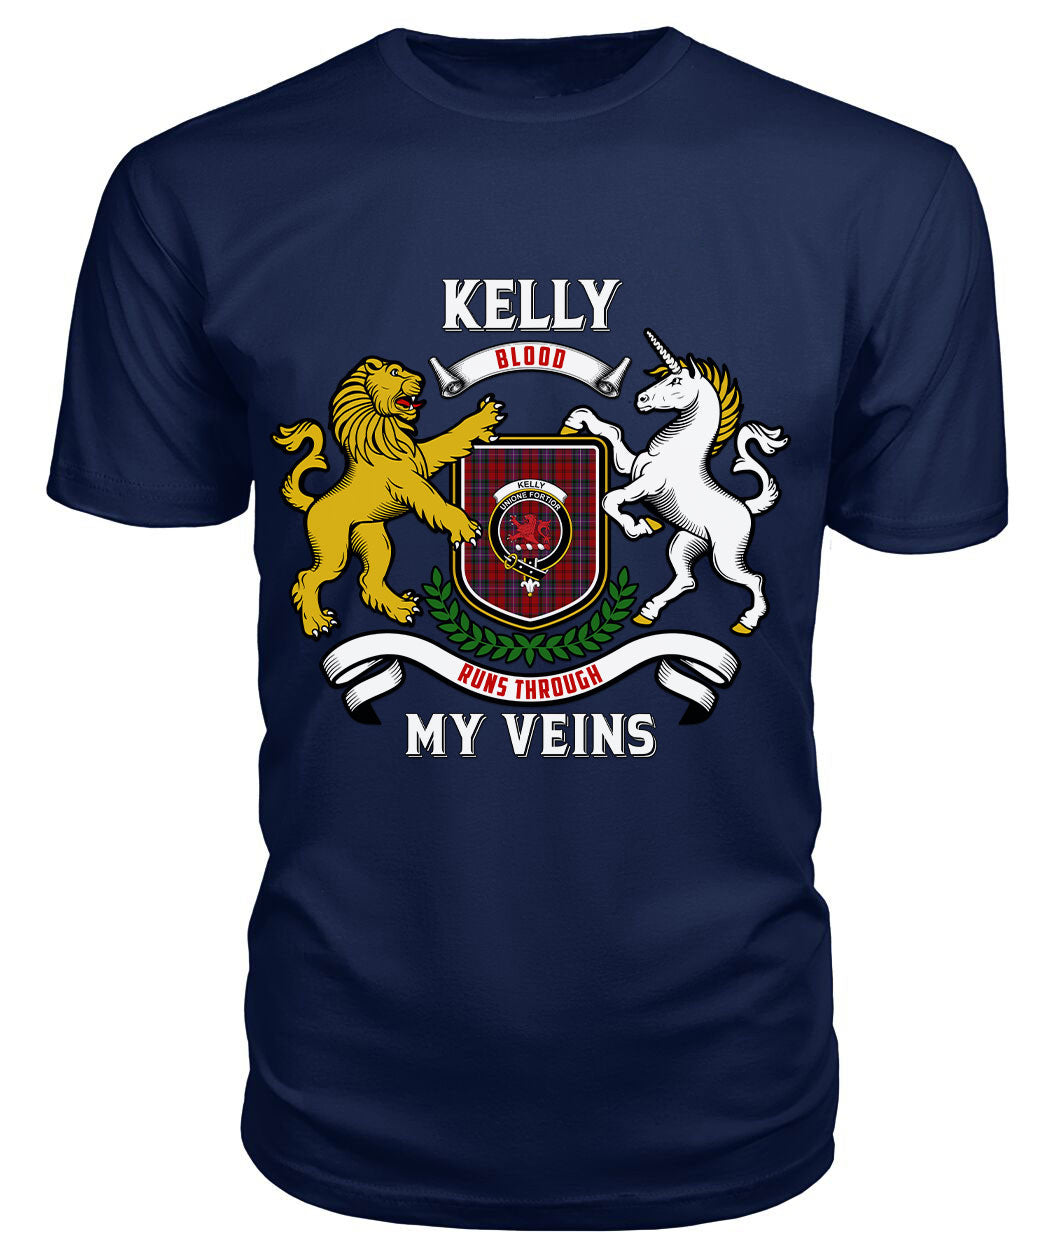 Kelly of Sleat Red Tartan Crest 2D T-shirt - Blood Runs Through My Veins Style